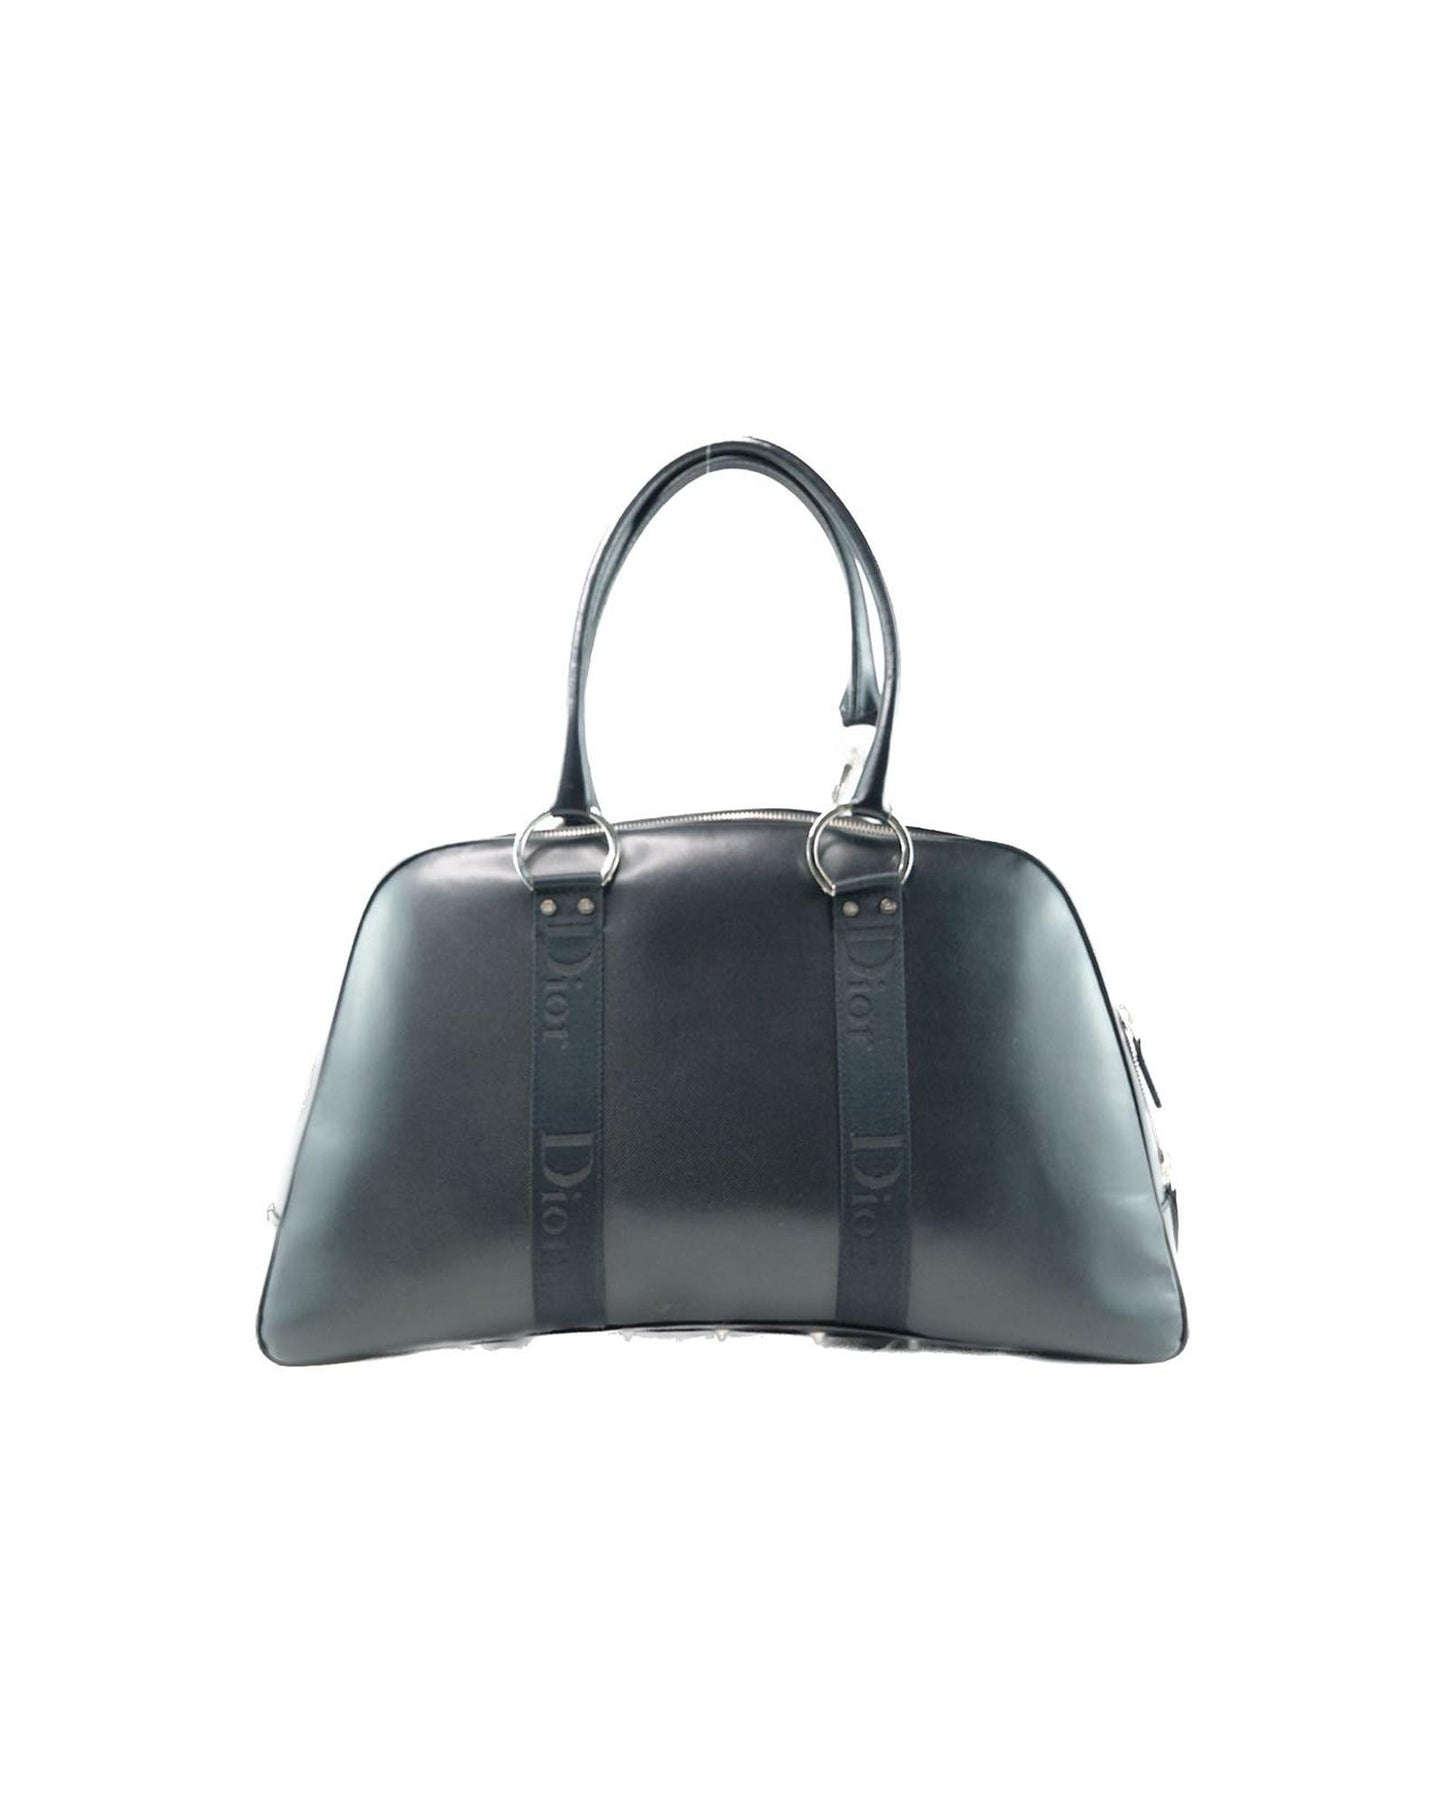 Dior Women's Black Leather Handbag in Excellent Condition in Black